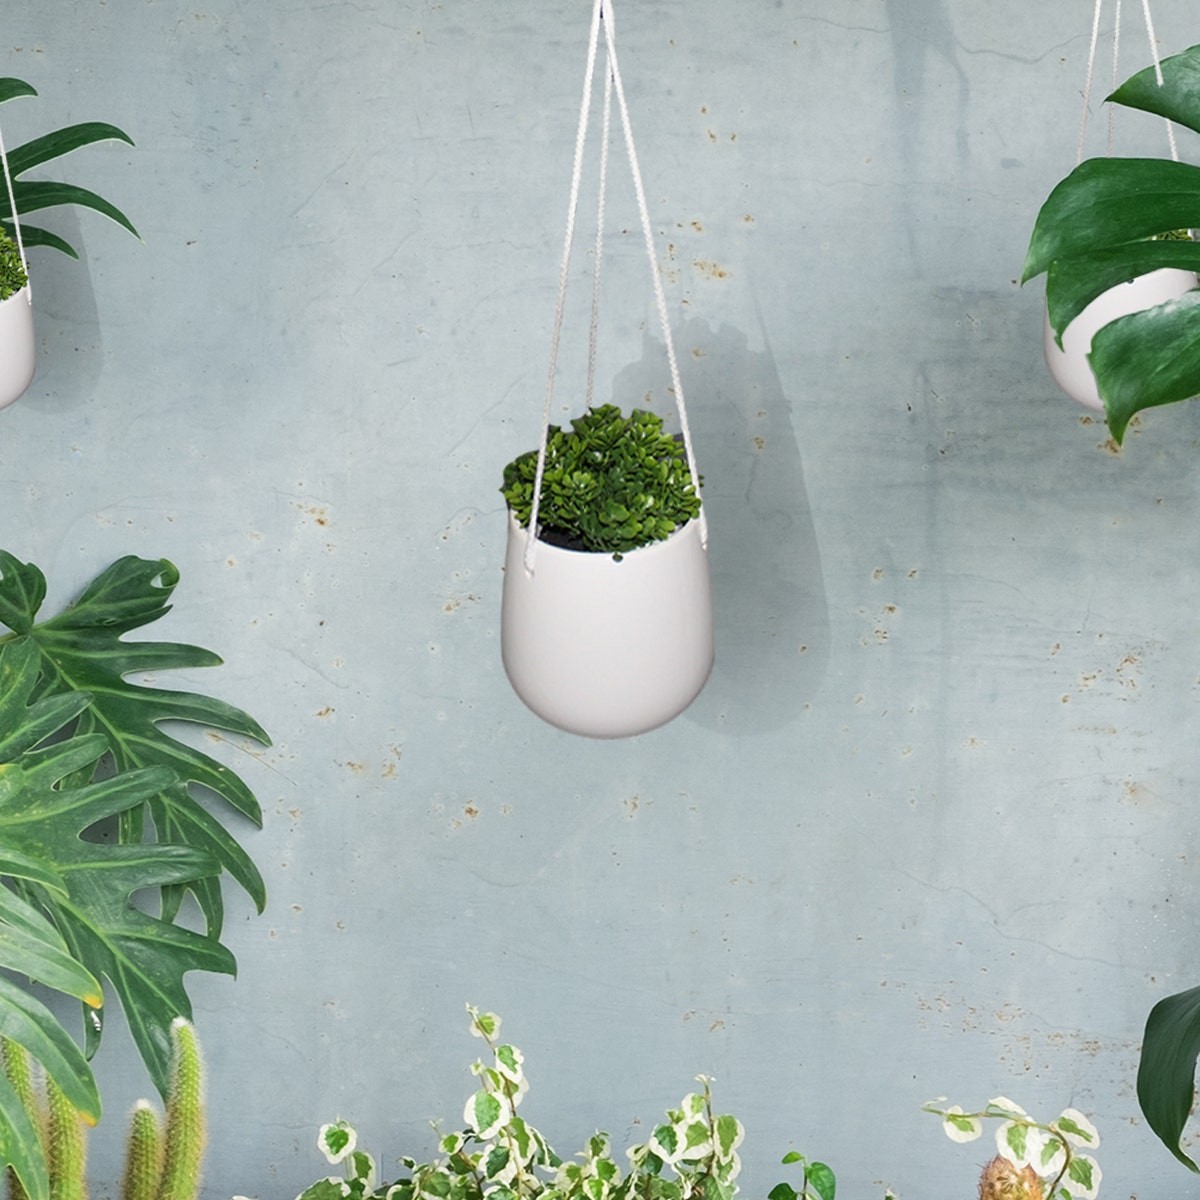 Ceramic 5” Hanging Planter Indoor Plant Holder With Rope Hanger